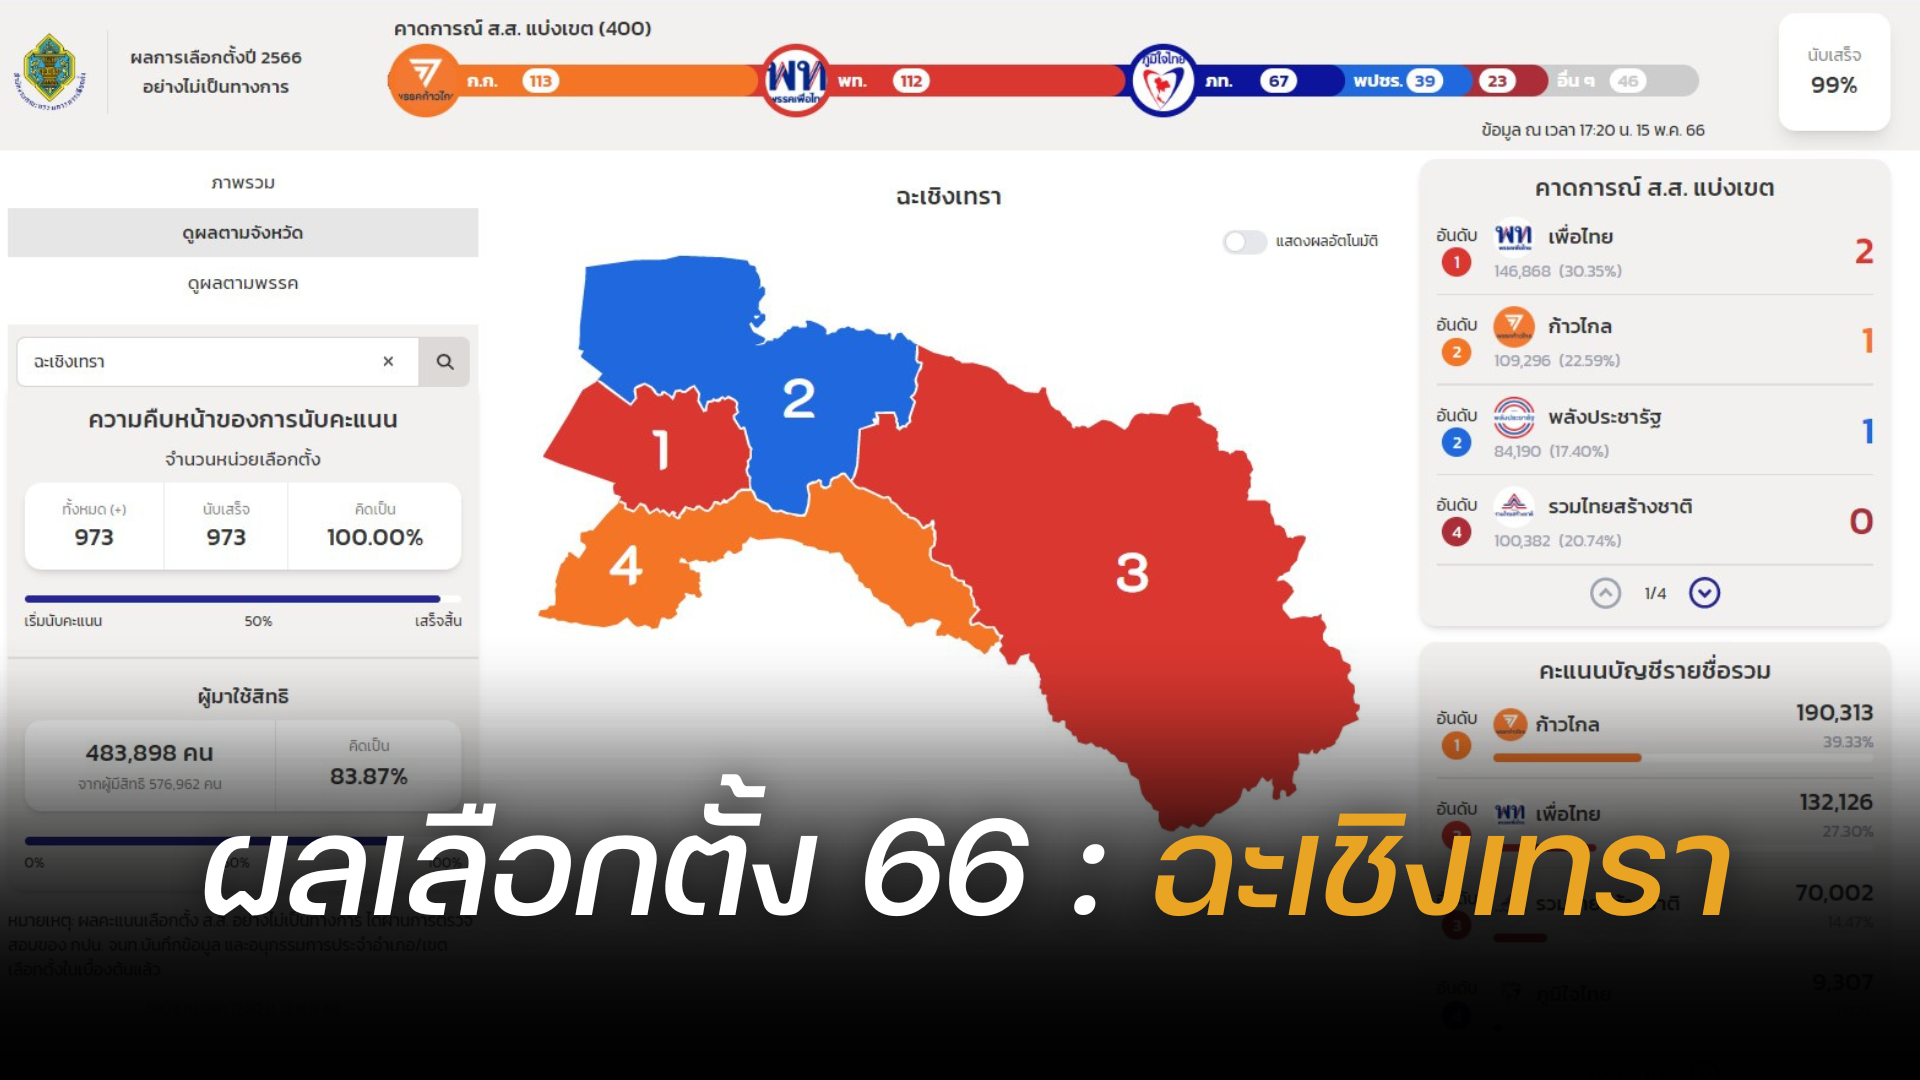 Thailand election 2566 Chachoengsao